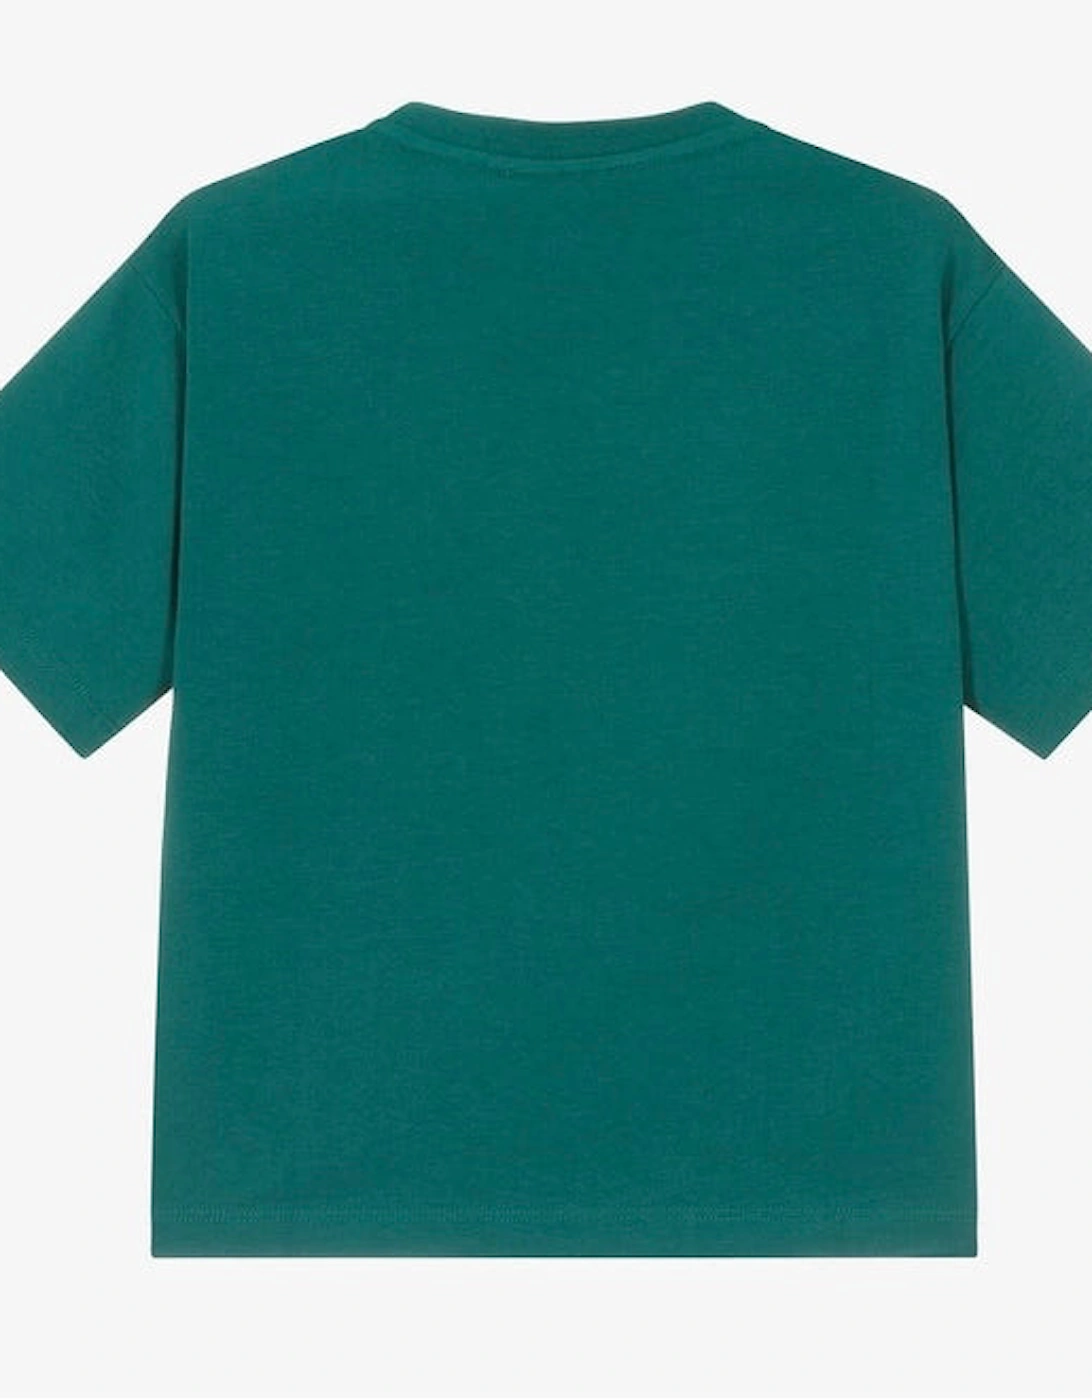 Emerald Green T shirts